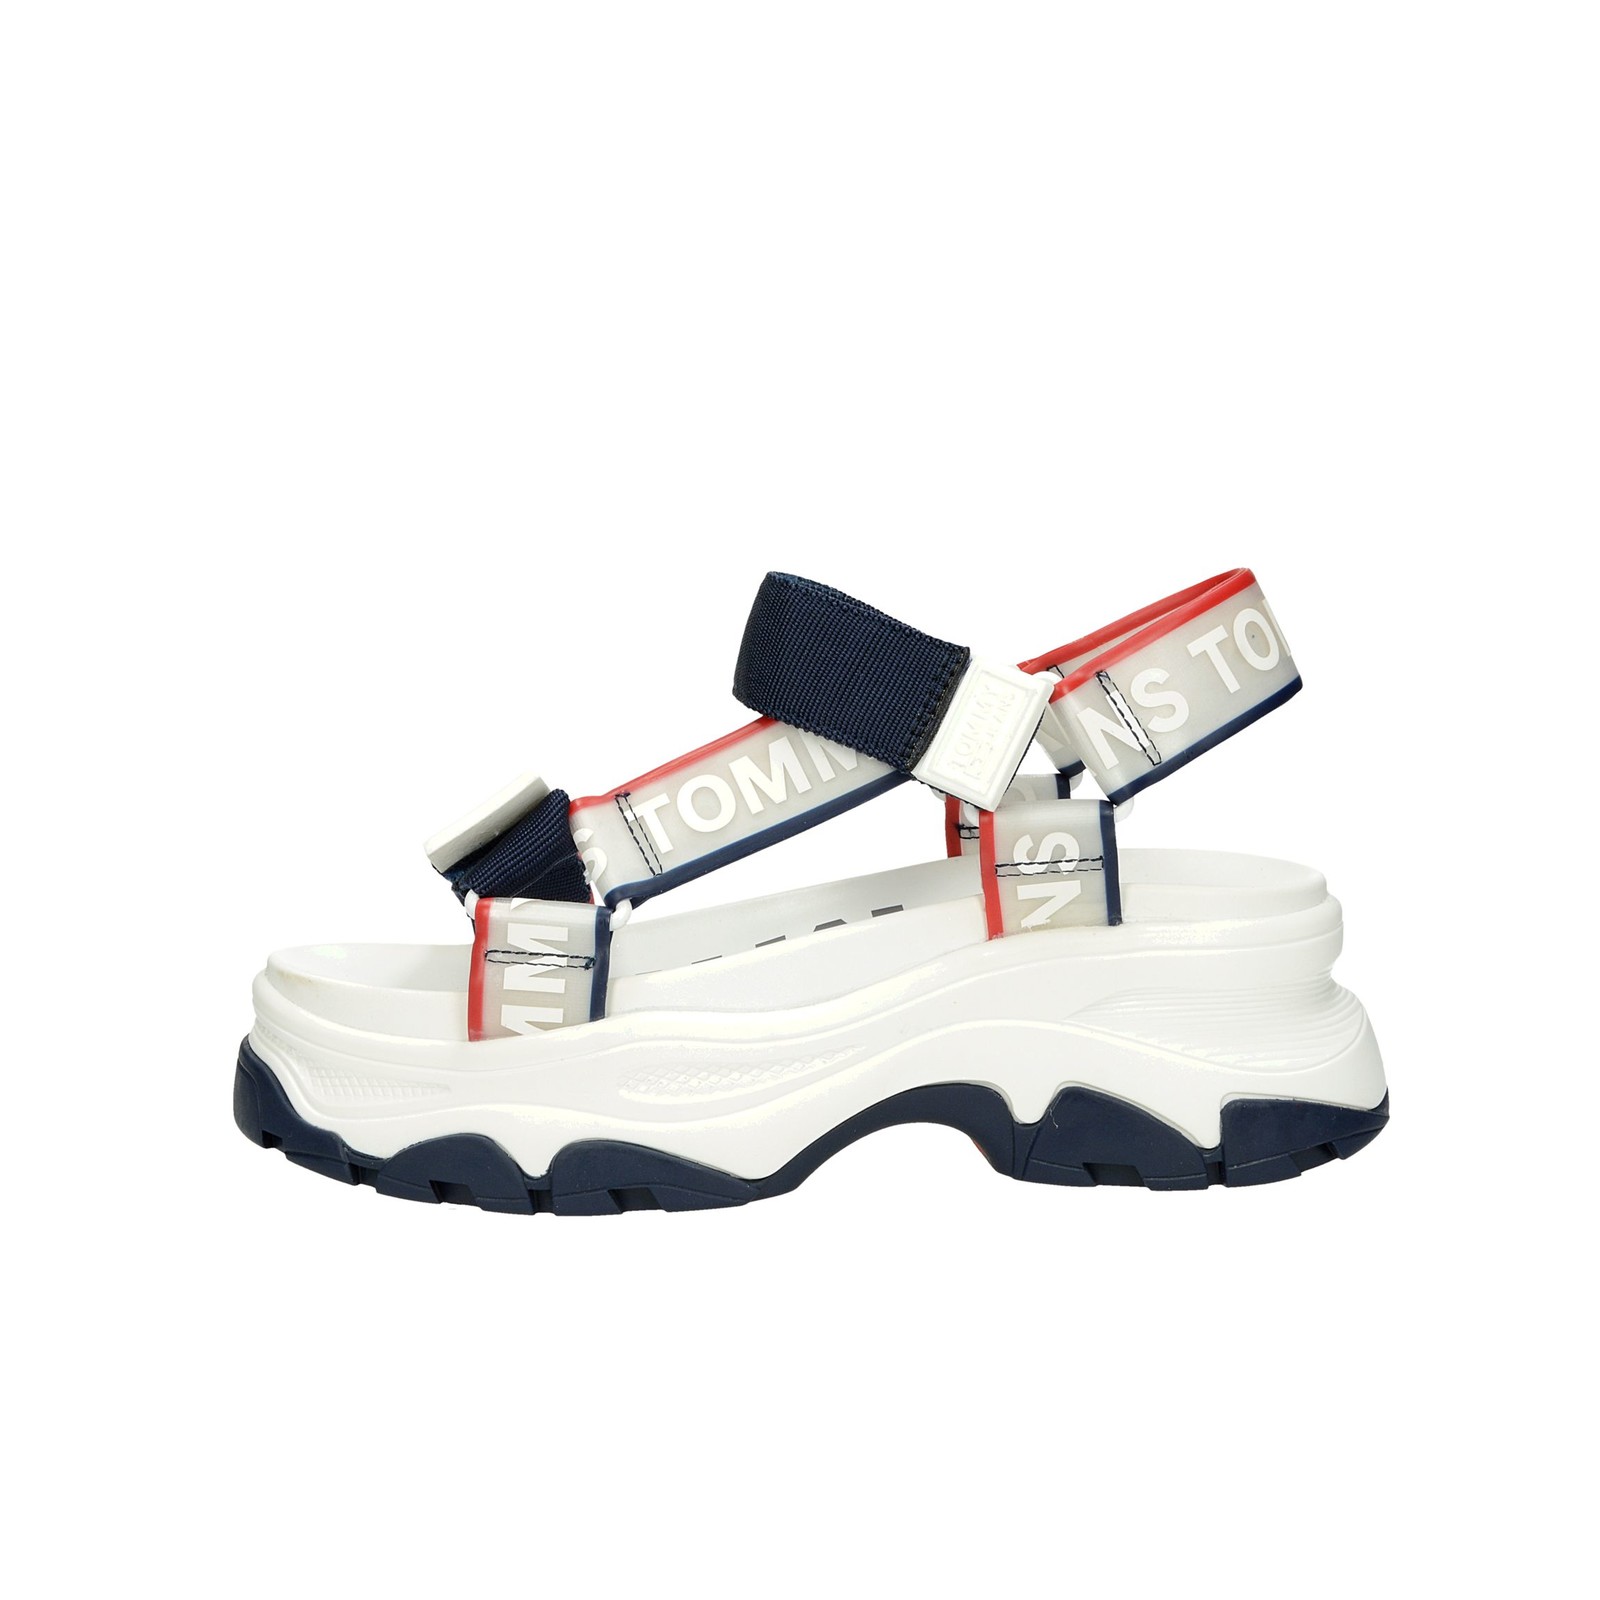 In de genade van Drank zegevierend Tommy Hilfiger women´s stylish platform sandals - white | Robel.shoes